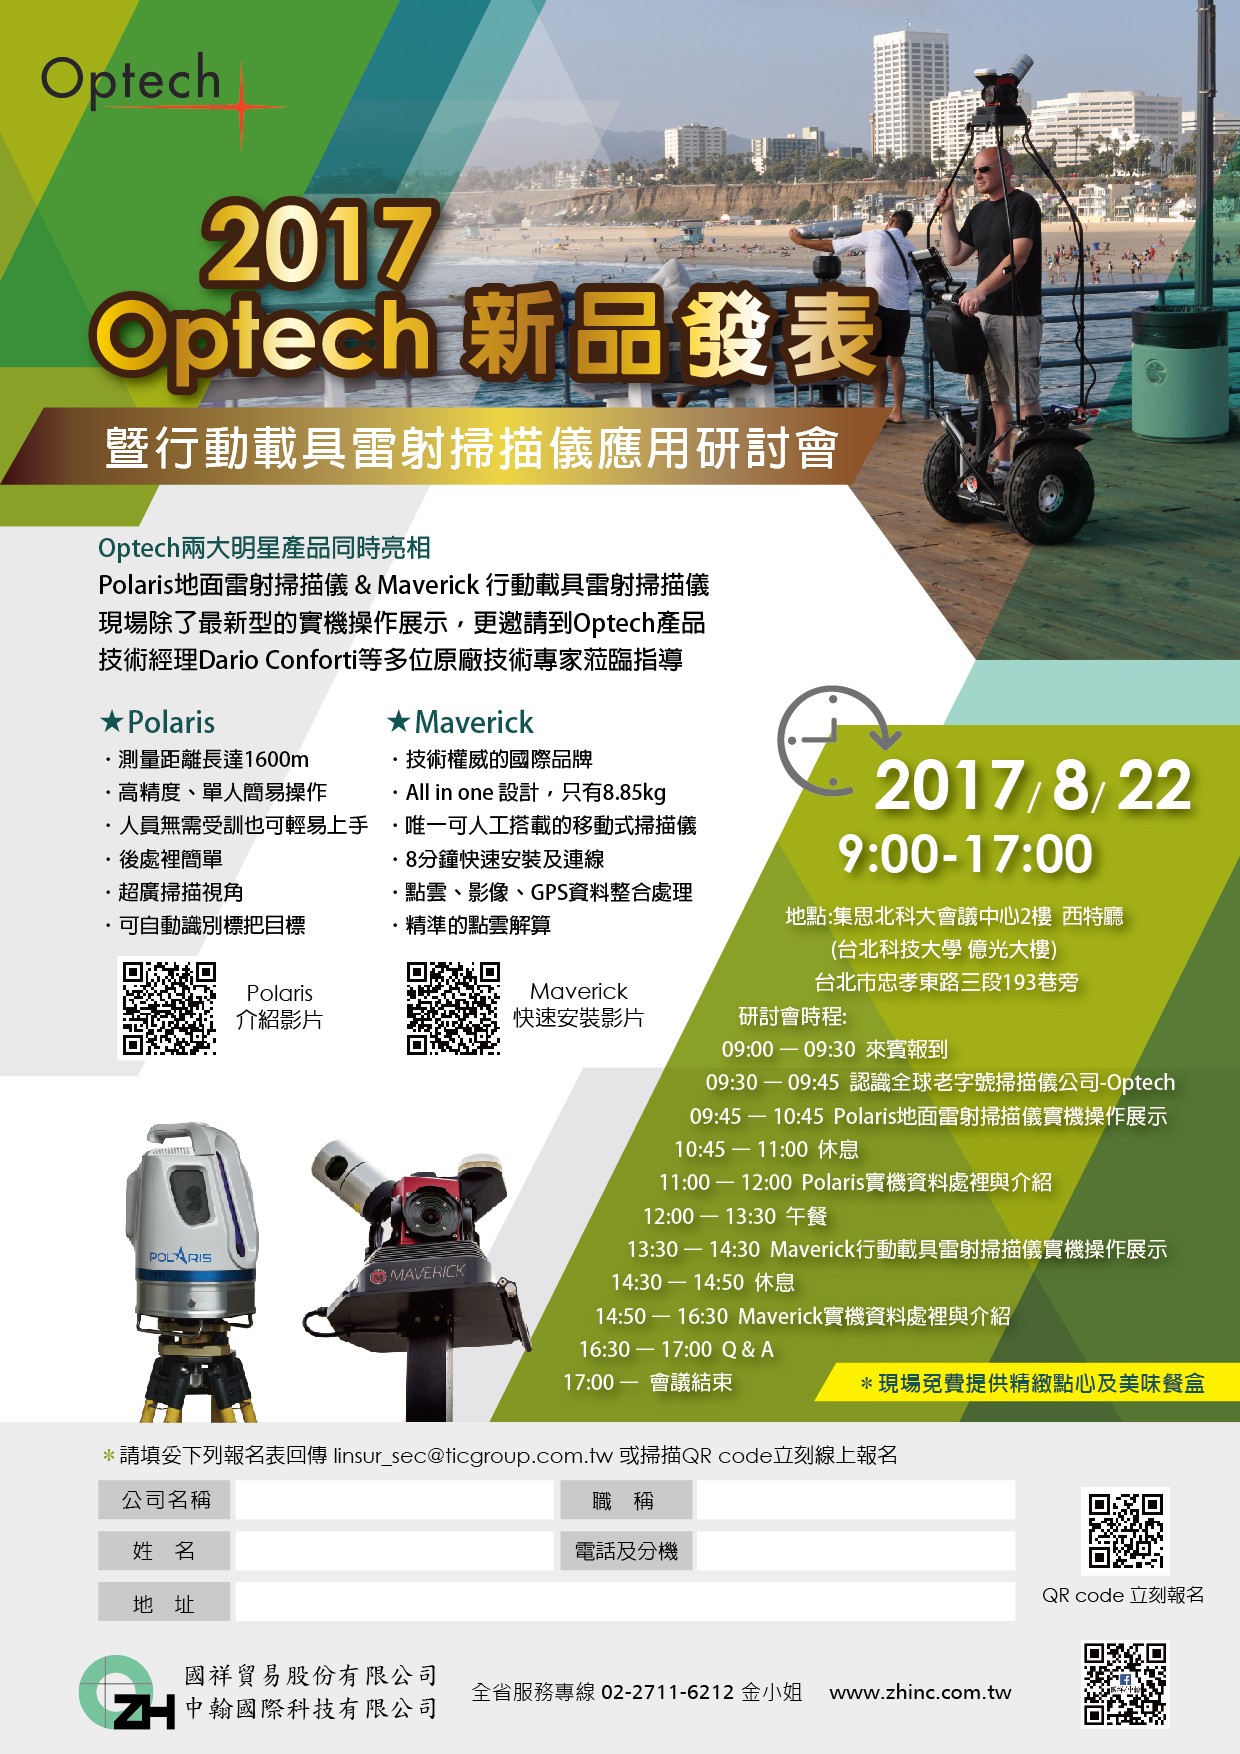 OPTECH新品發表-01.jpg - 2017 Optech新品發表暨行動載具雷射掃描儀應用研討會